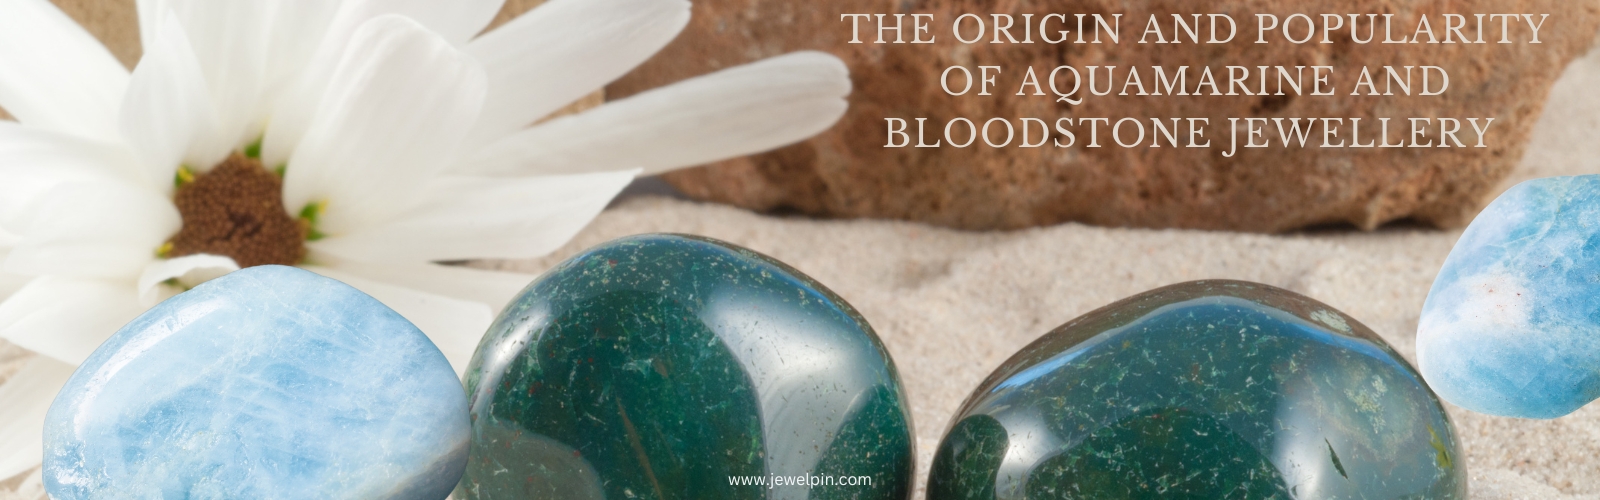 The Origin and Popularity of Aquamarine and Bloodstone Jewellery  - Jewelpin